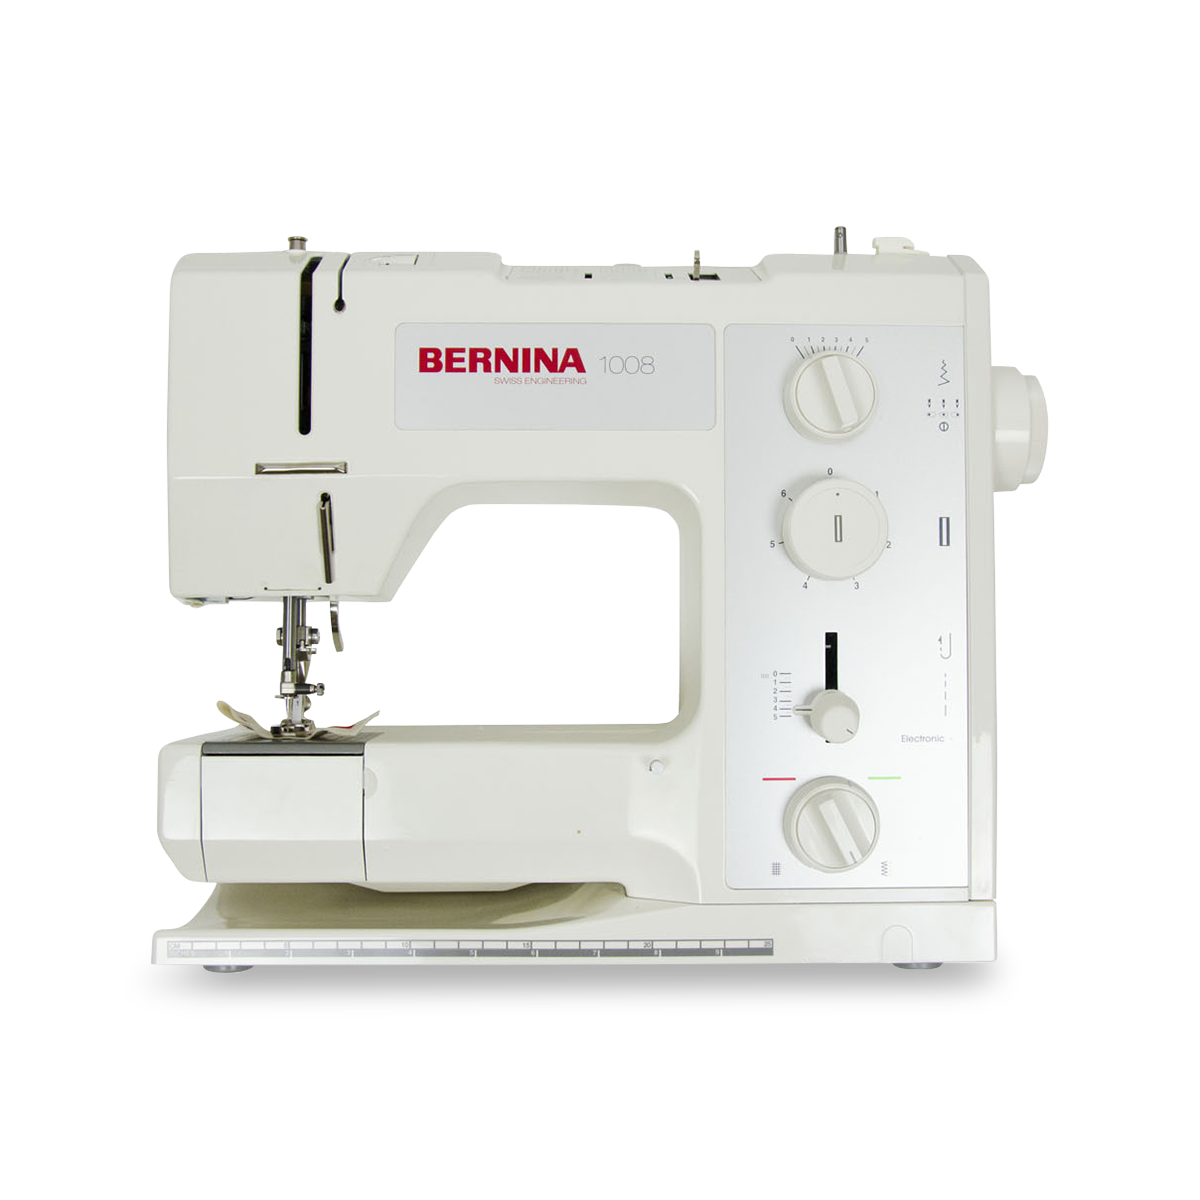 Bernina Sewing Machine 1008